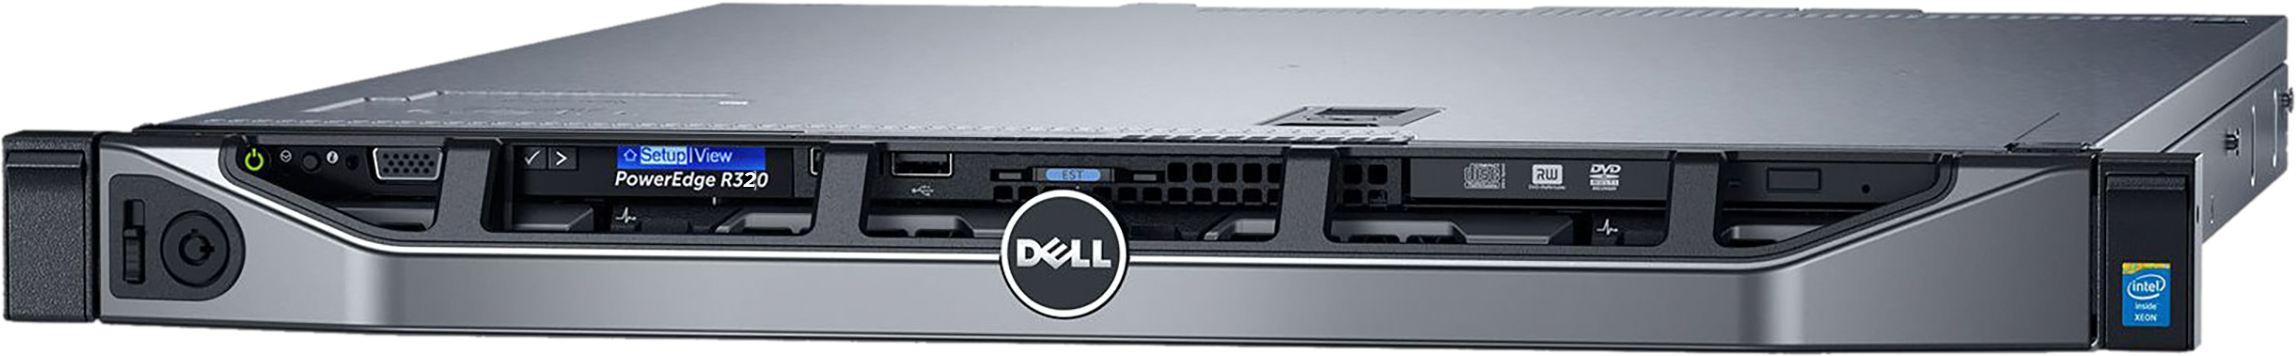 Аренда физического сервера DELL R320 / 1×E5-2420 v2 / 8 GB RAM / 2 × 240 GB SSD / 2 × 1 TB HDD / H310